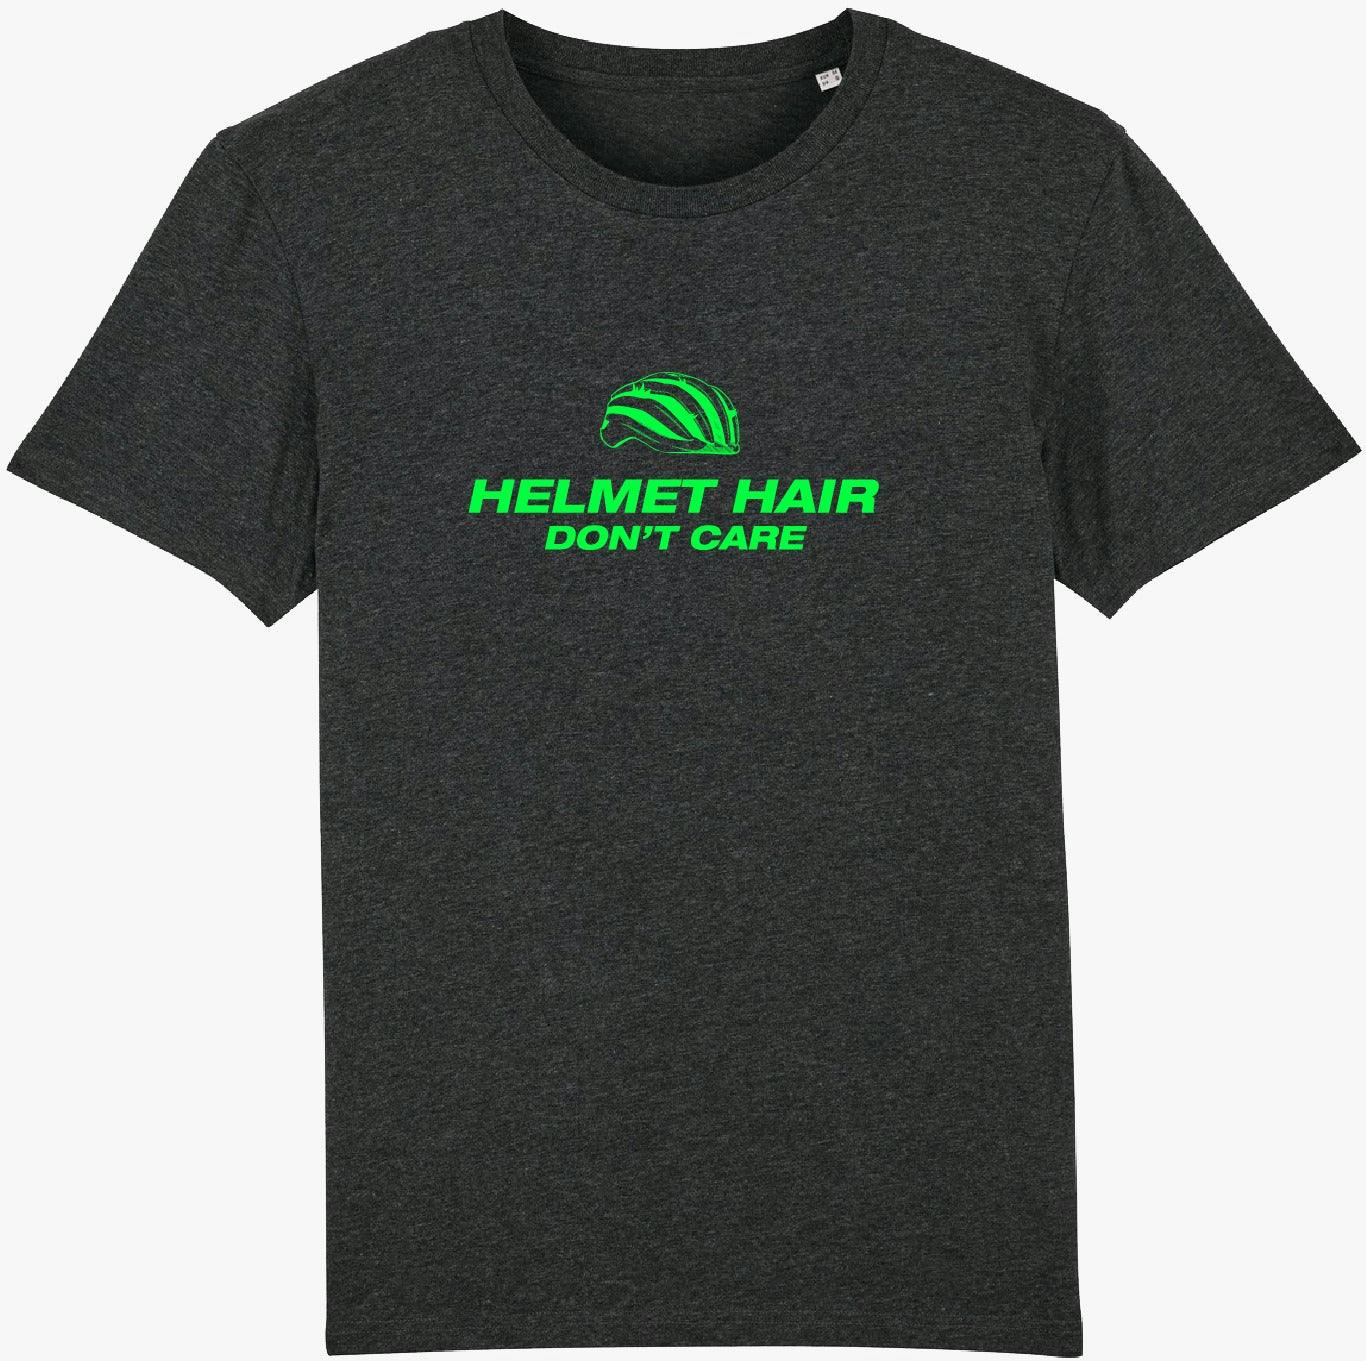 Helmet hair don't care unisex cycling T-shirt (dark grey neon green)